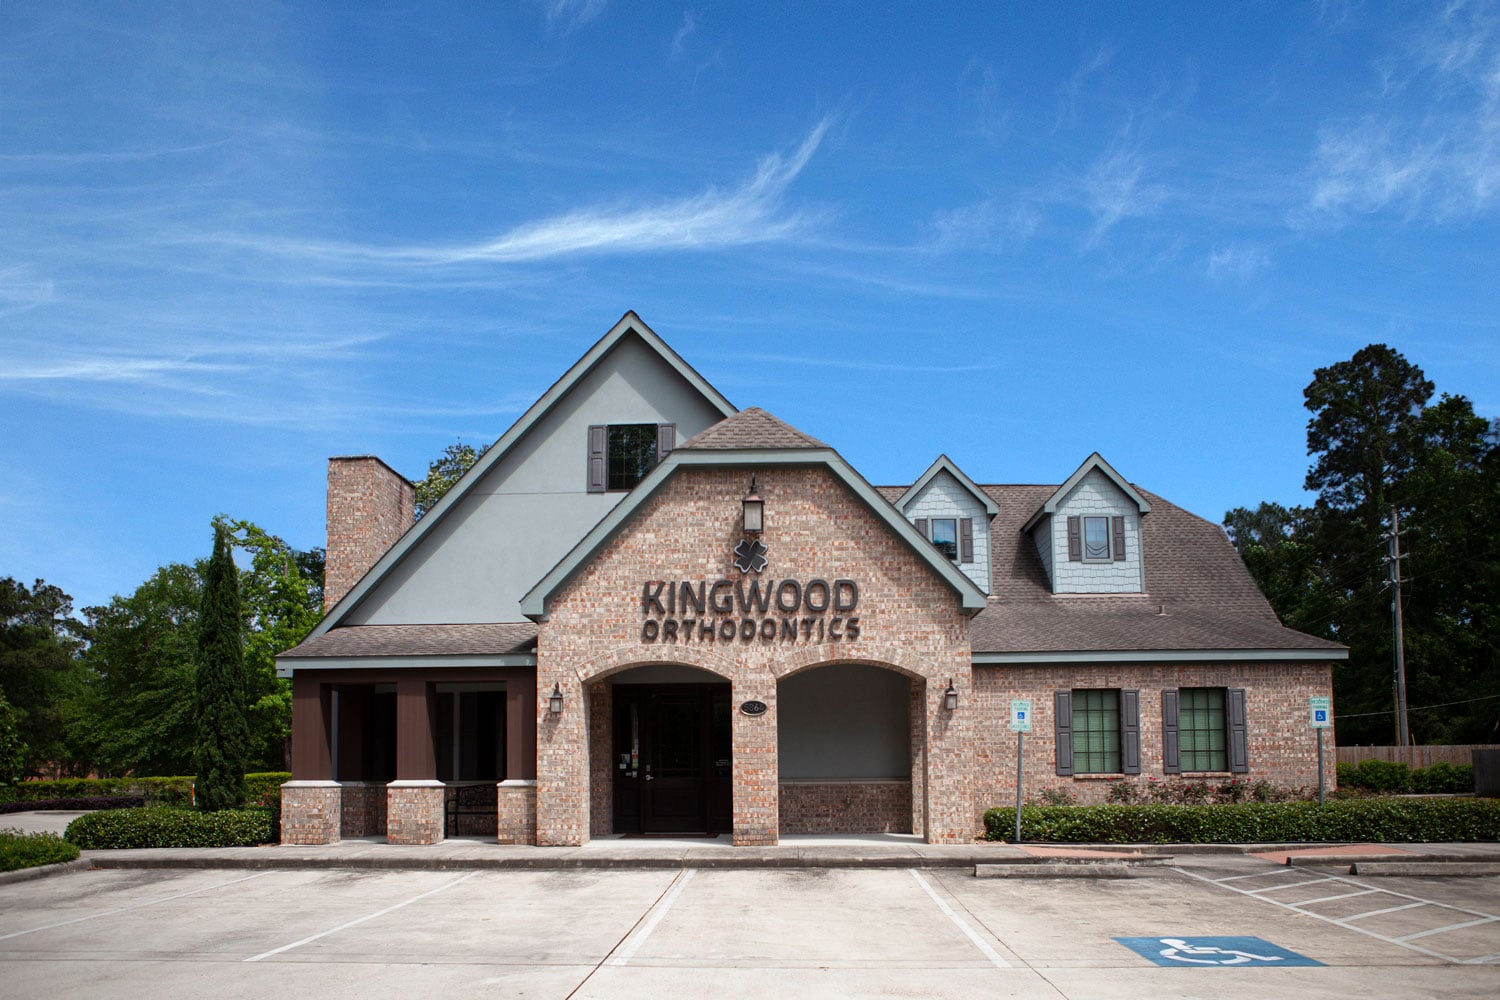 Front shot of Kingwood Orthodontics building